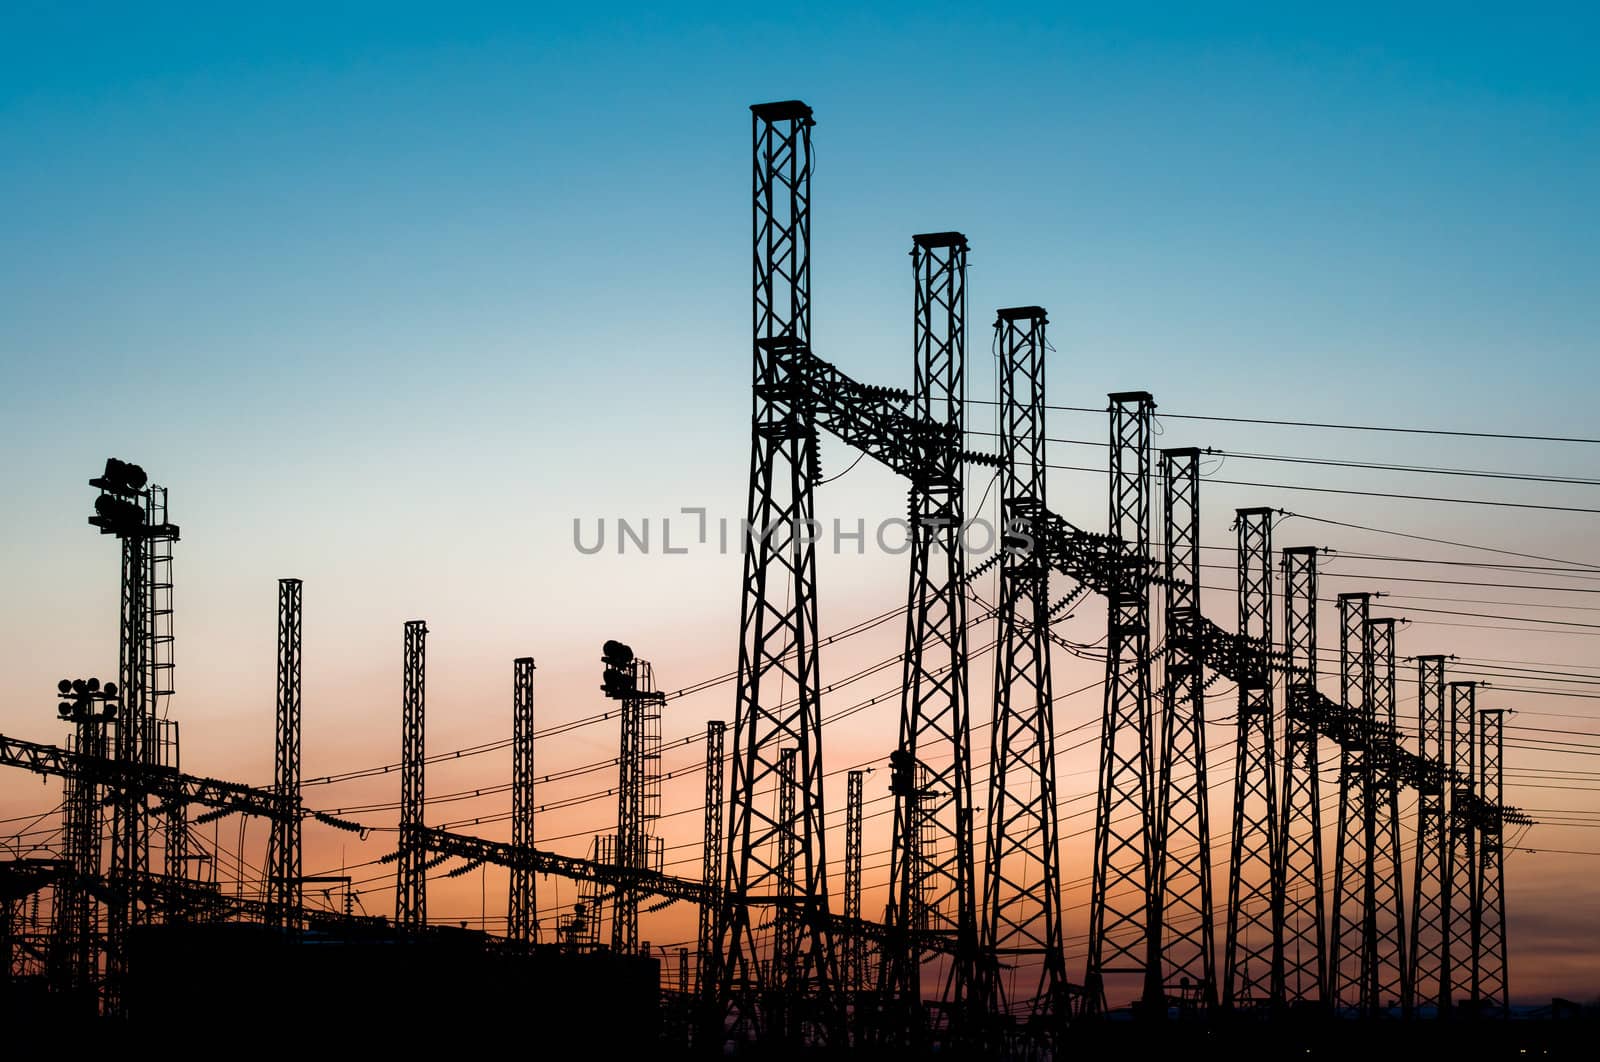 Power lines silhouettes by dmitryelagin